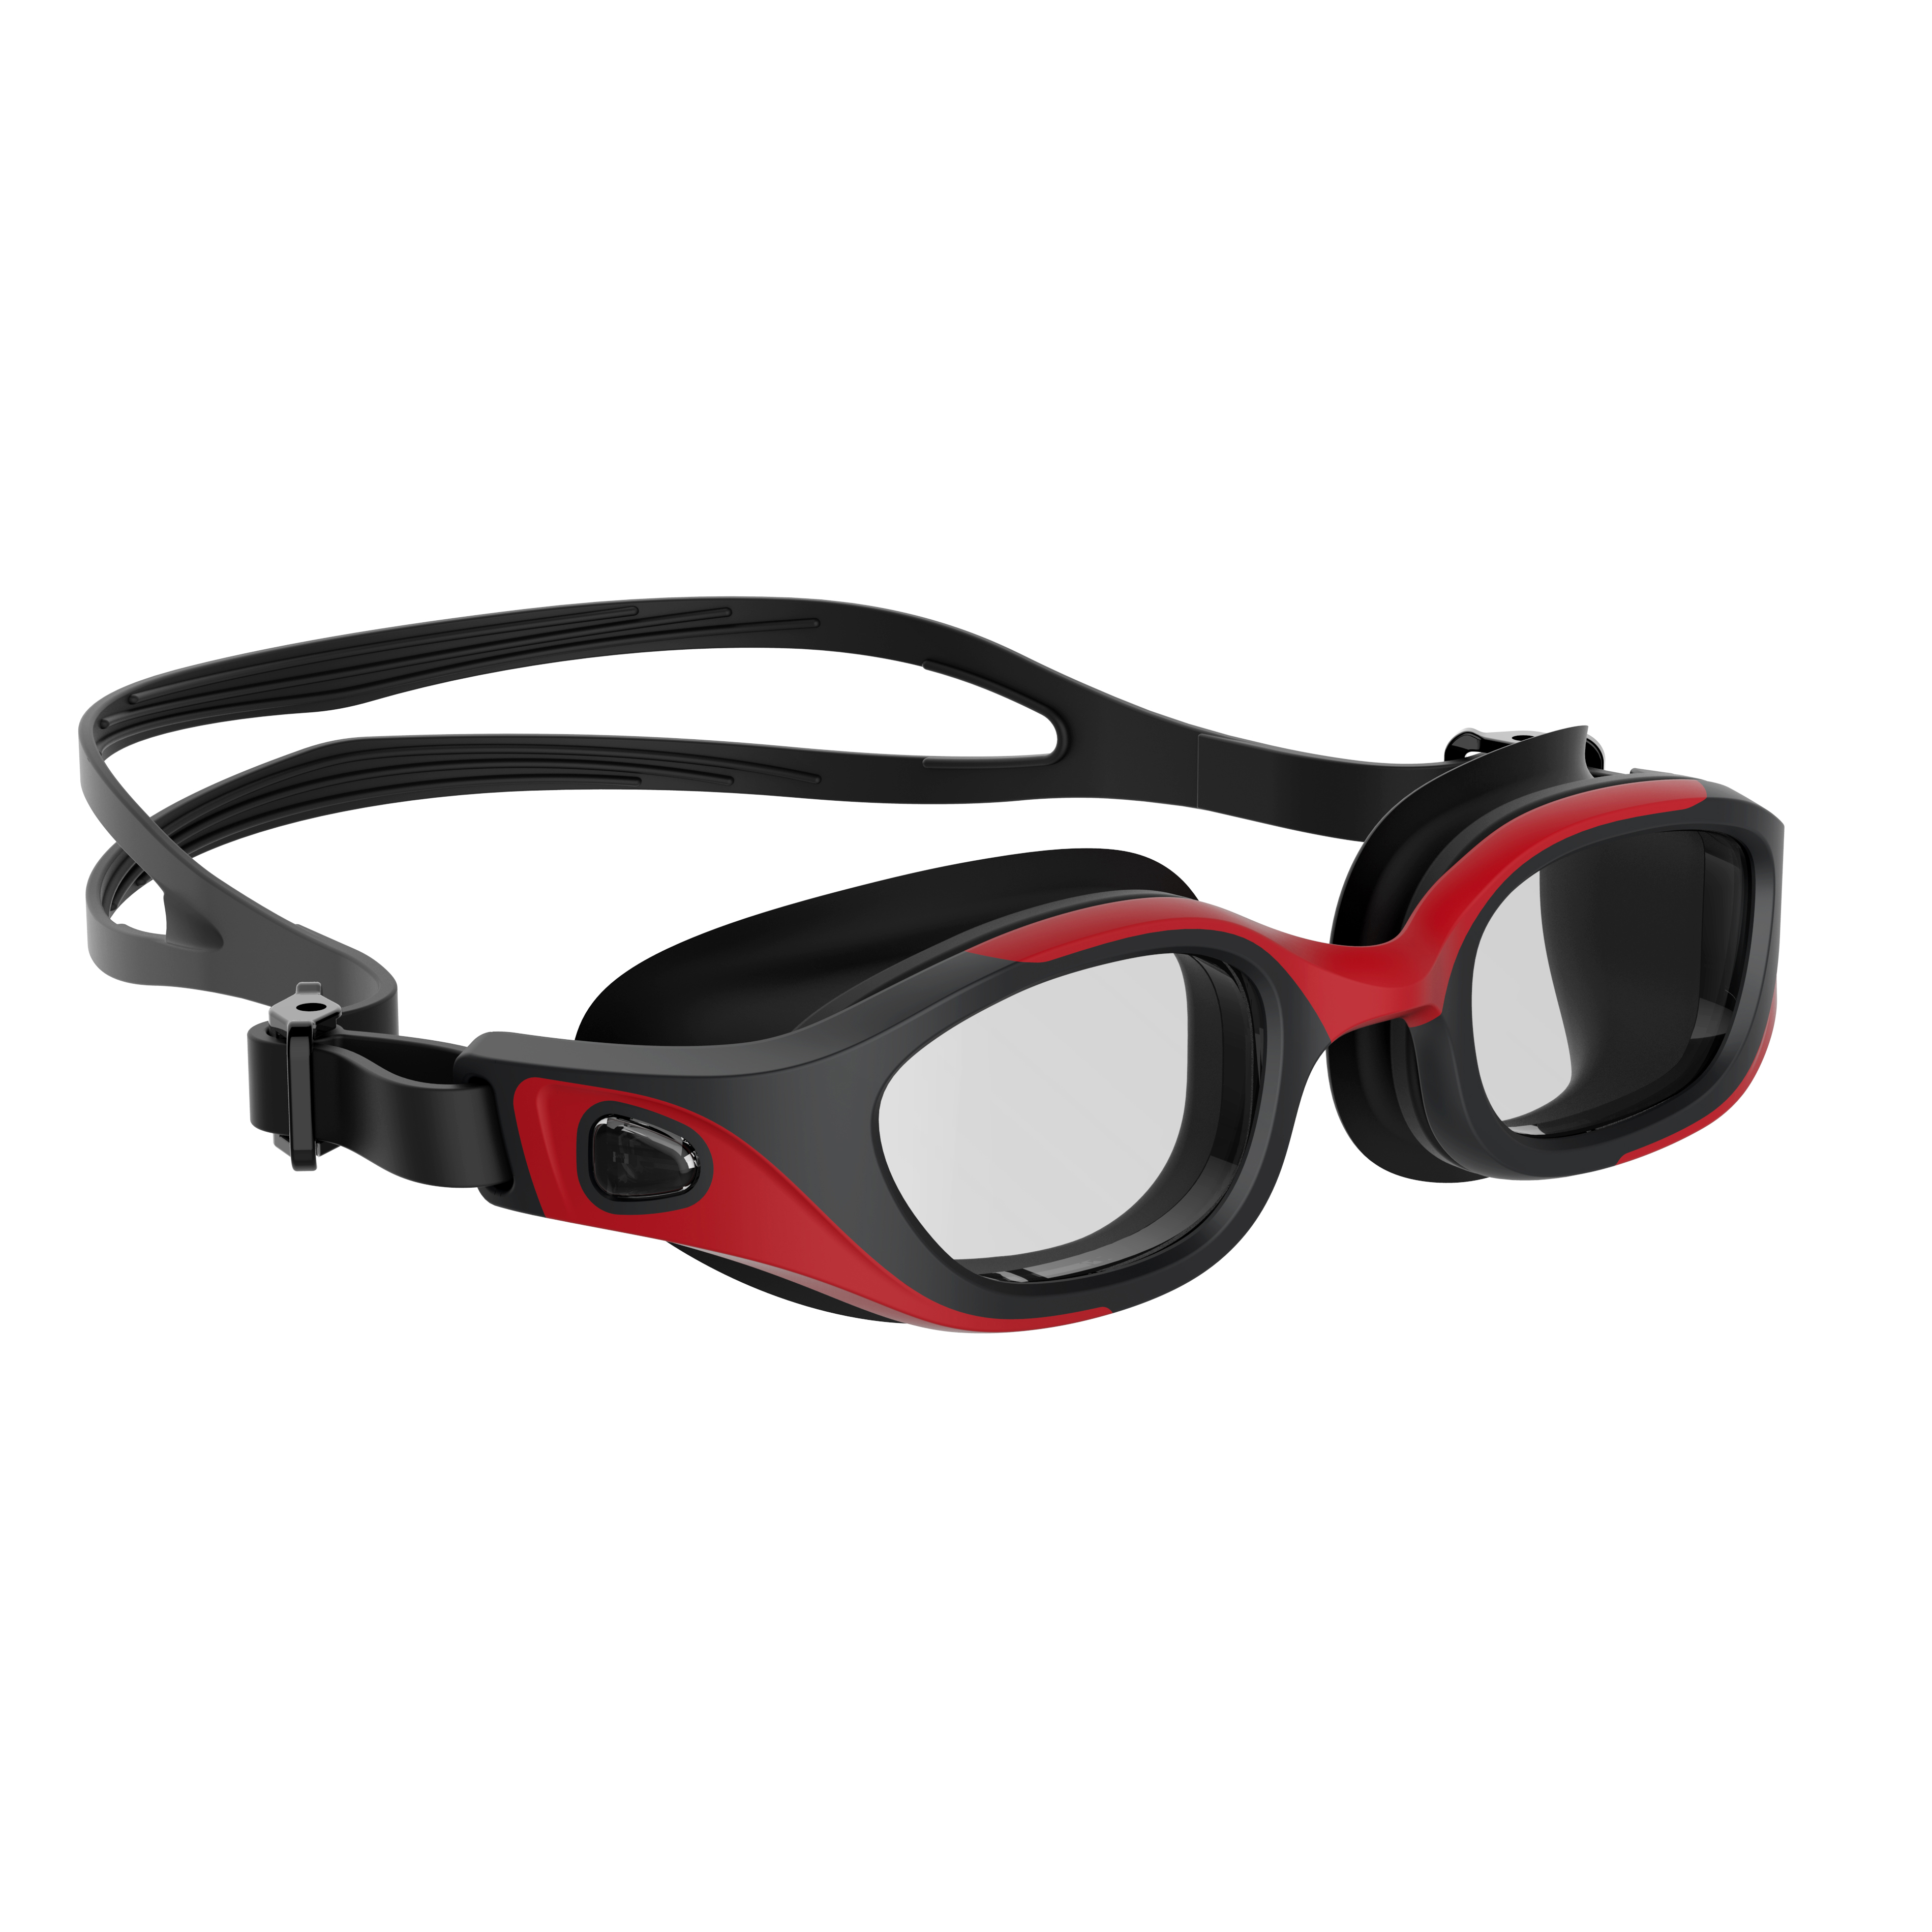 Swim goggles with Interchangeable Lenses